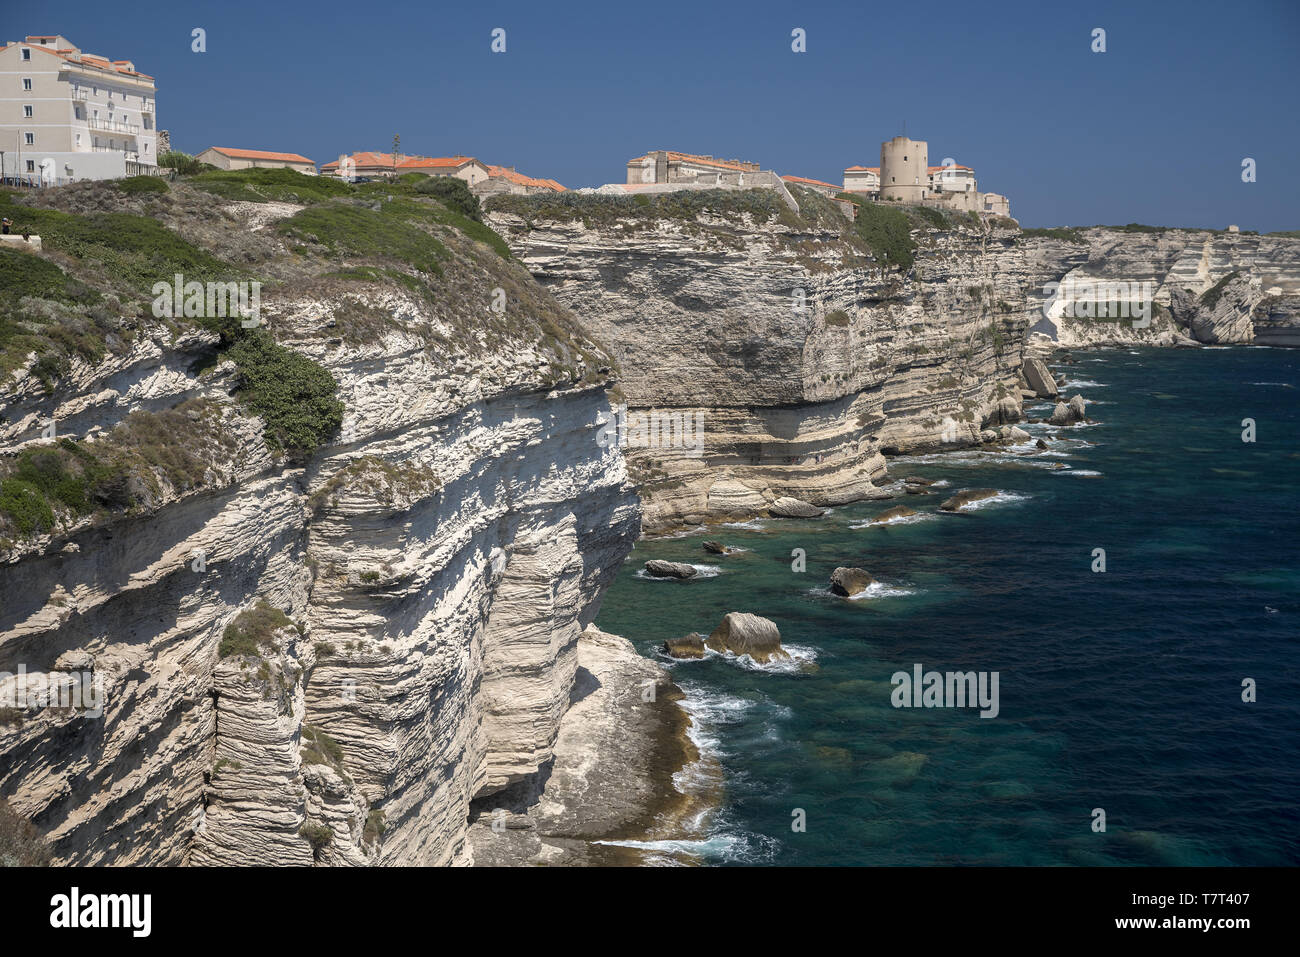 Cliffs near Bonifacio in Corsica. Klippen nahe Bonifacio auf Korsika. Klify w pobliżu Bonifacio na Korsyce. Stock Photo